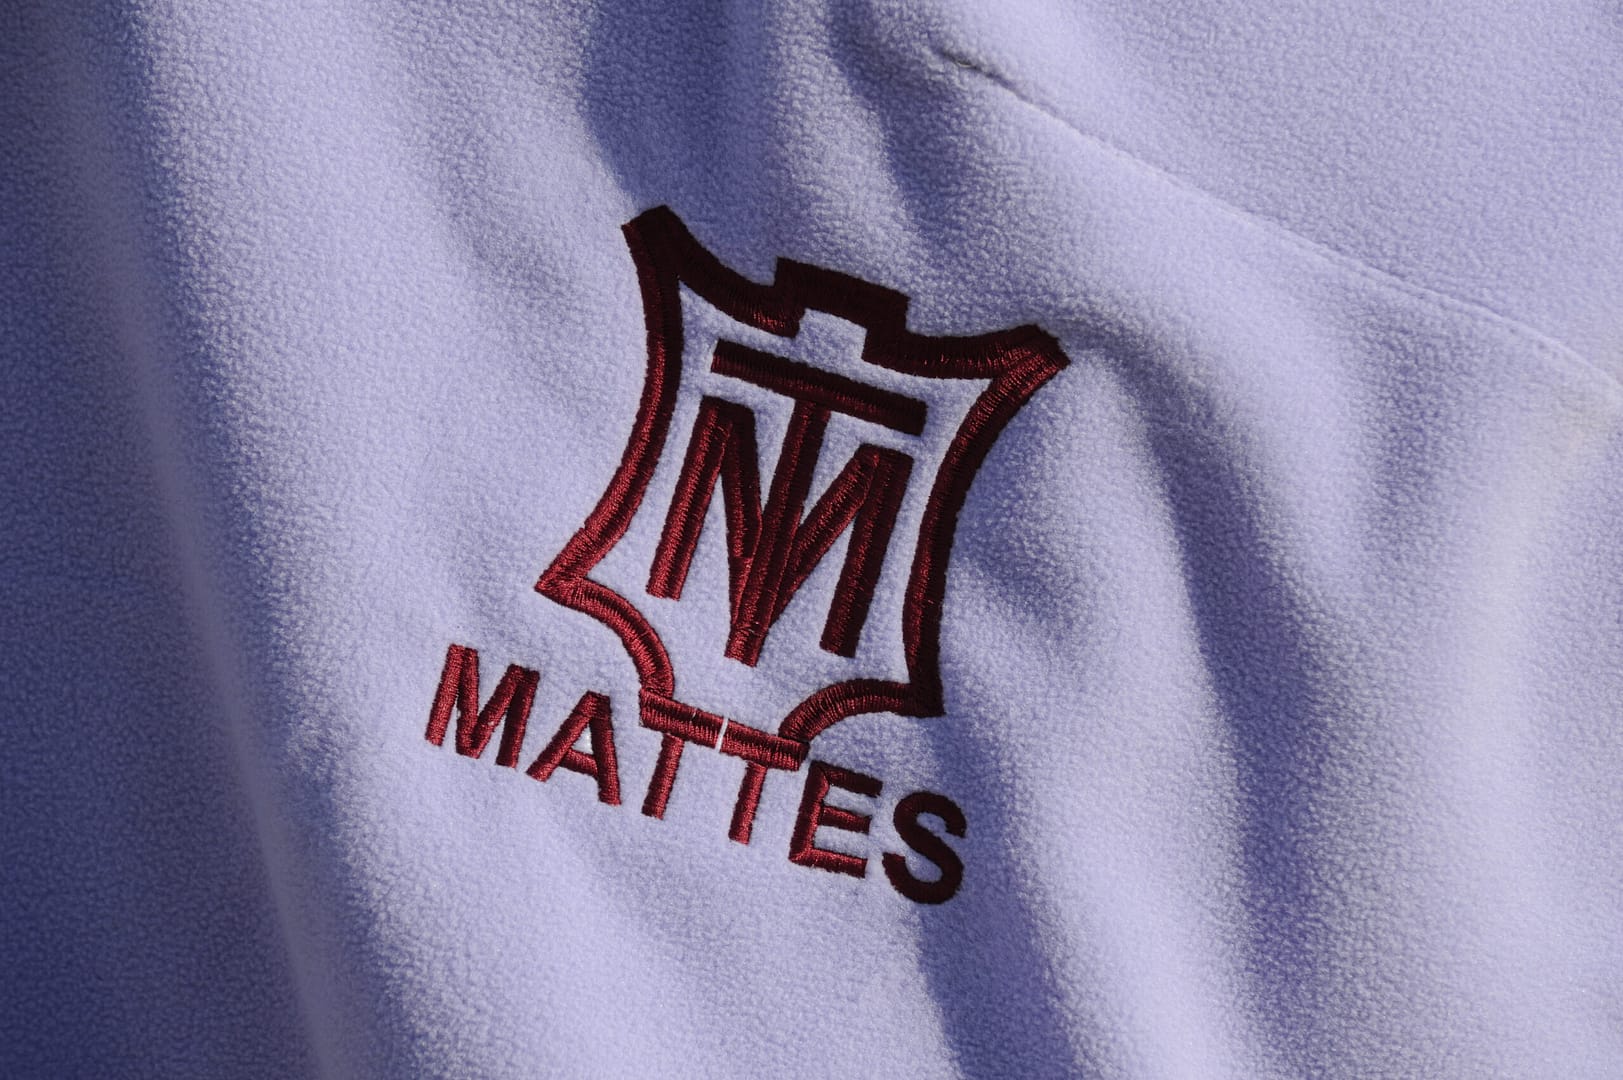 Mattes Logo